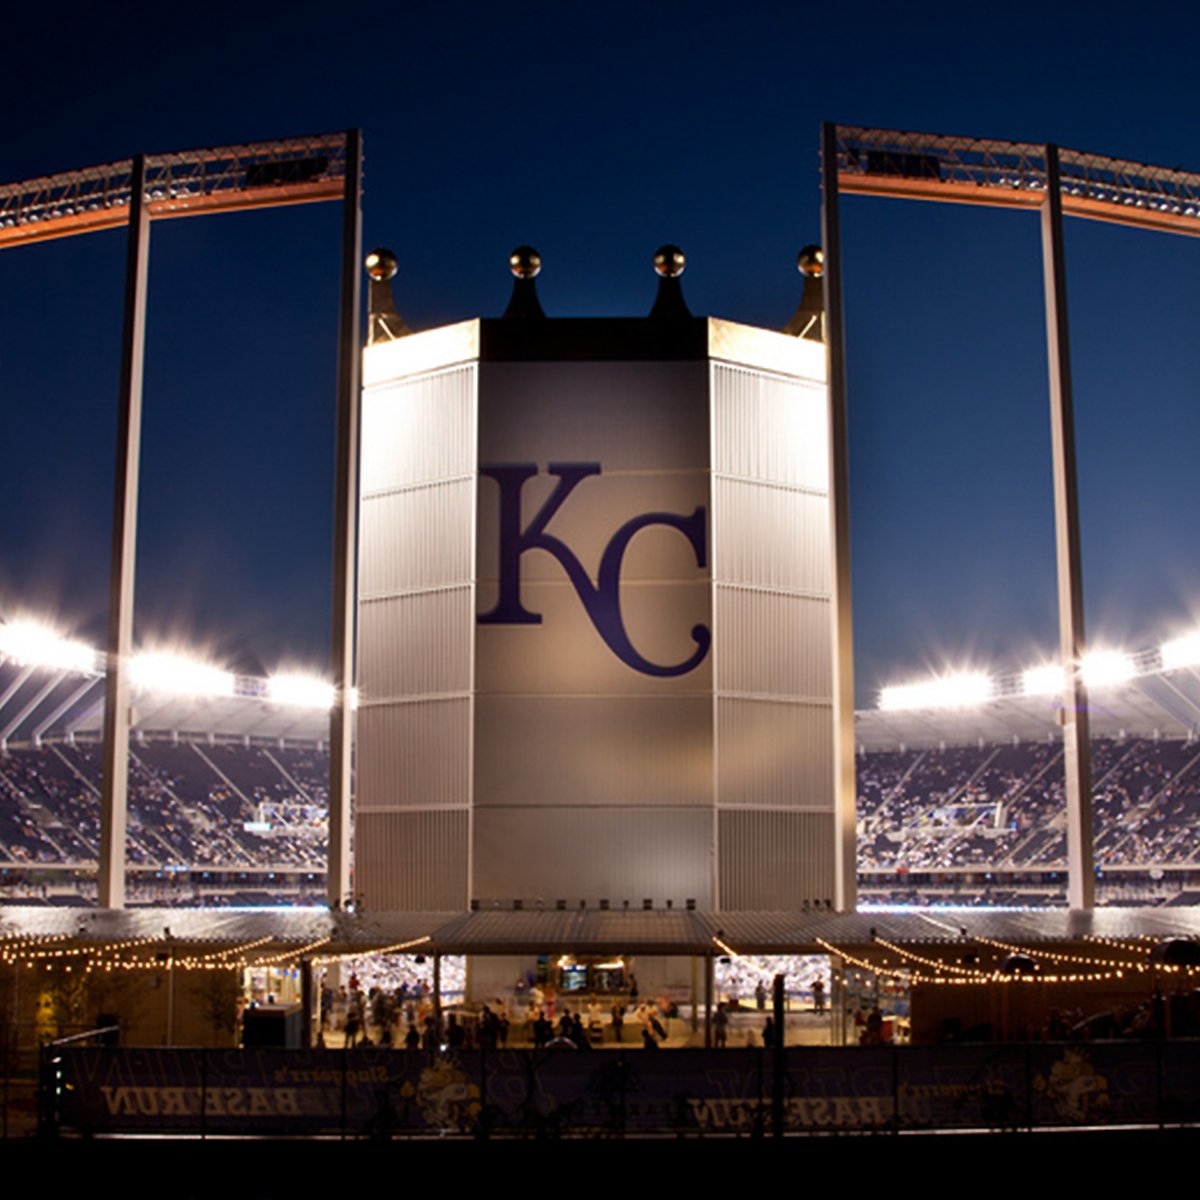 MLB on FOX - The Kansas City Royals revealed their new